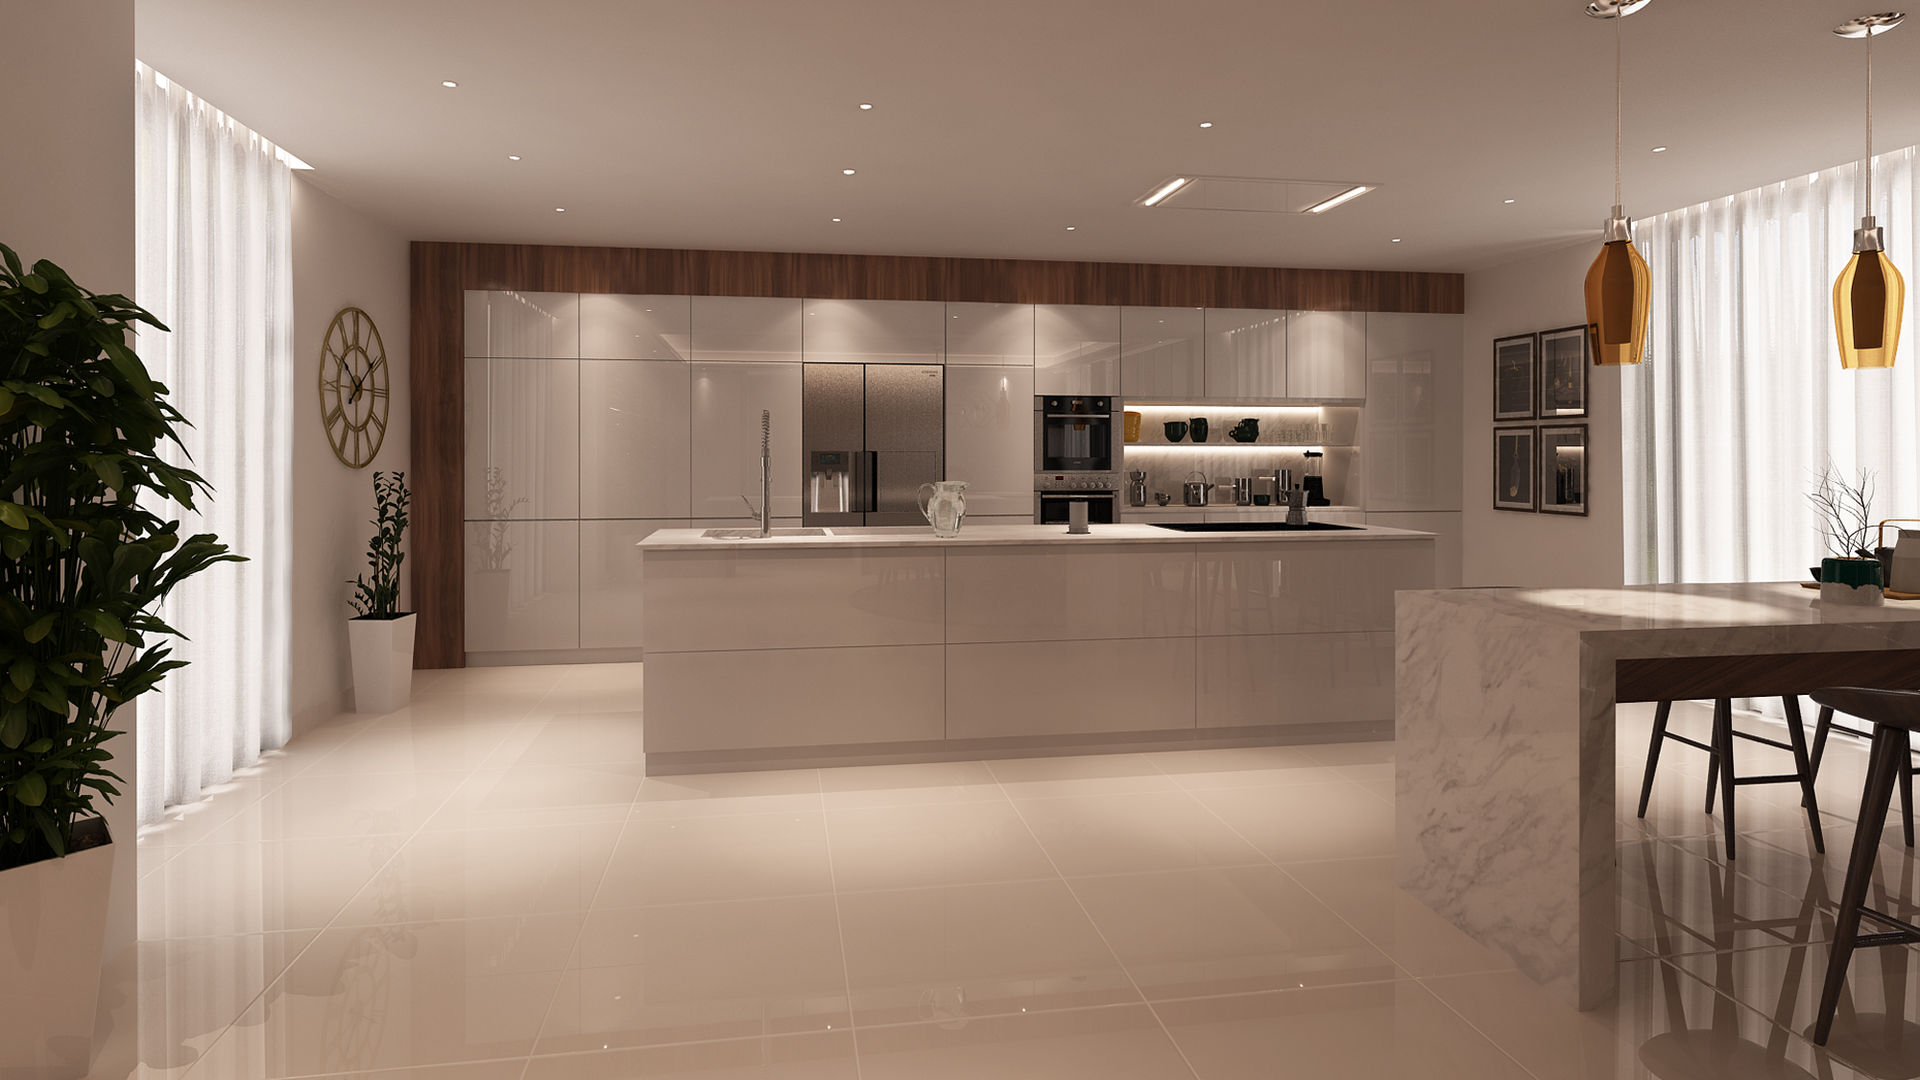 Projecto 3D -Cozinha e Sala de Jantar - Braga, Alpha Details Alpha Details Modern style kitchen